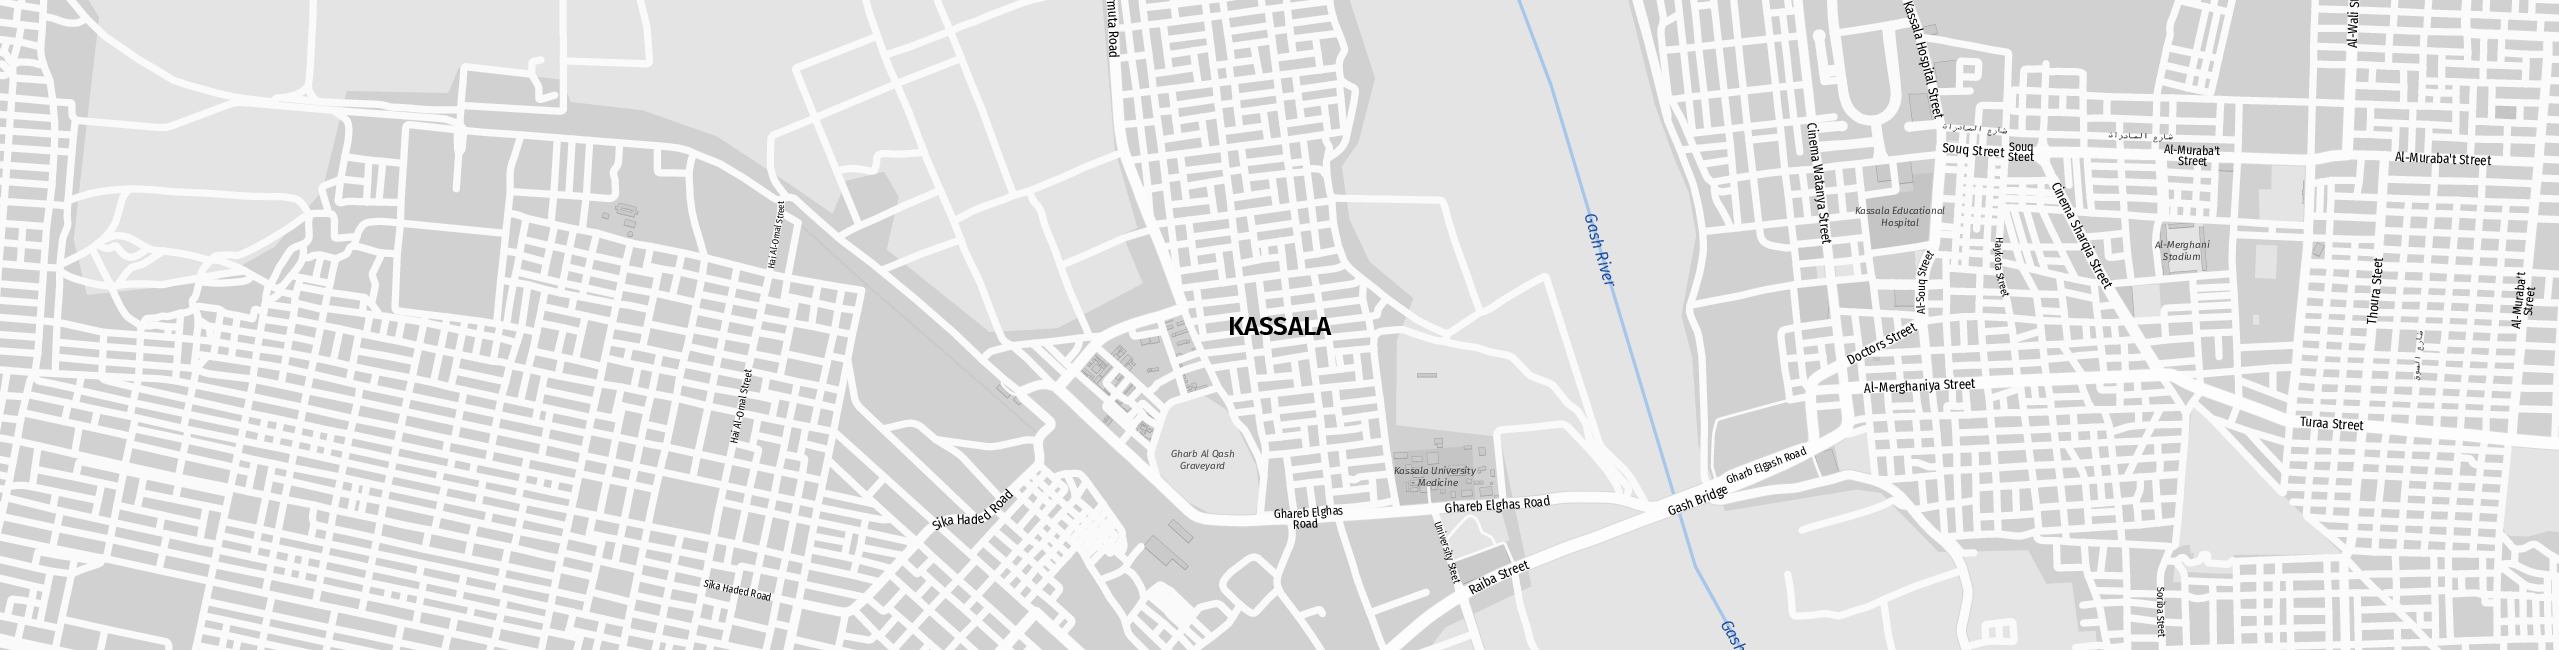 Stadtplan Kassala zum Downloaden.